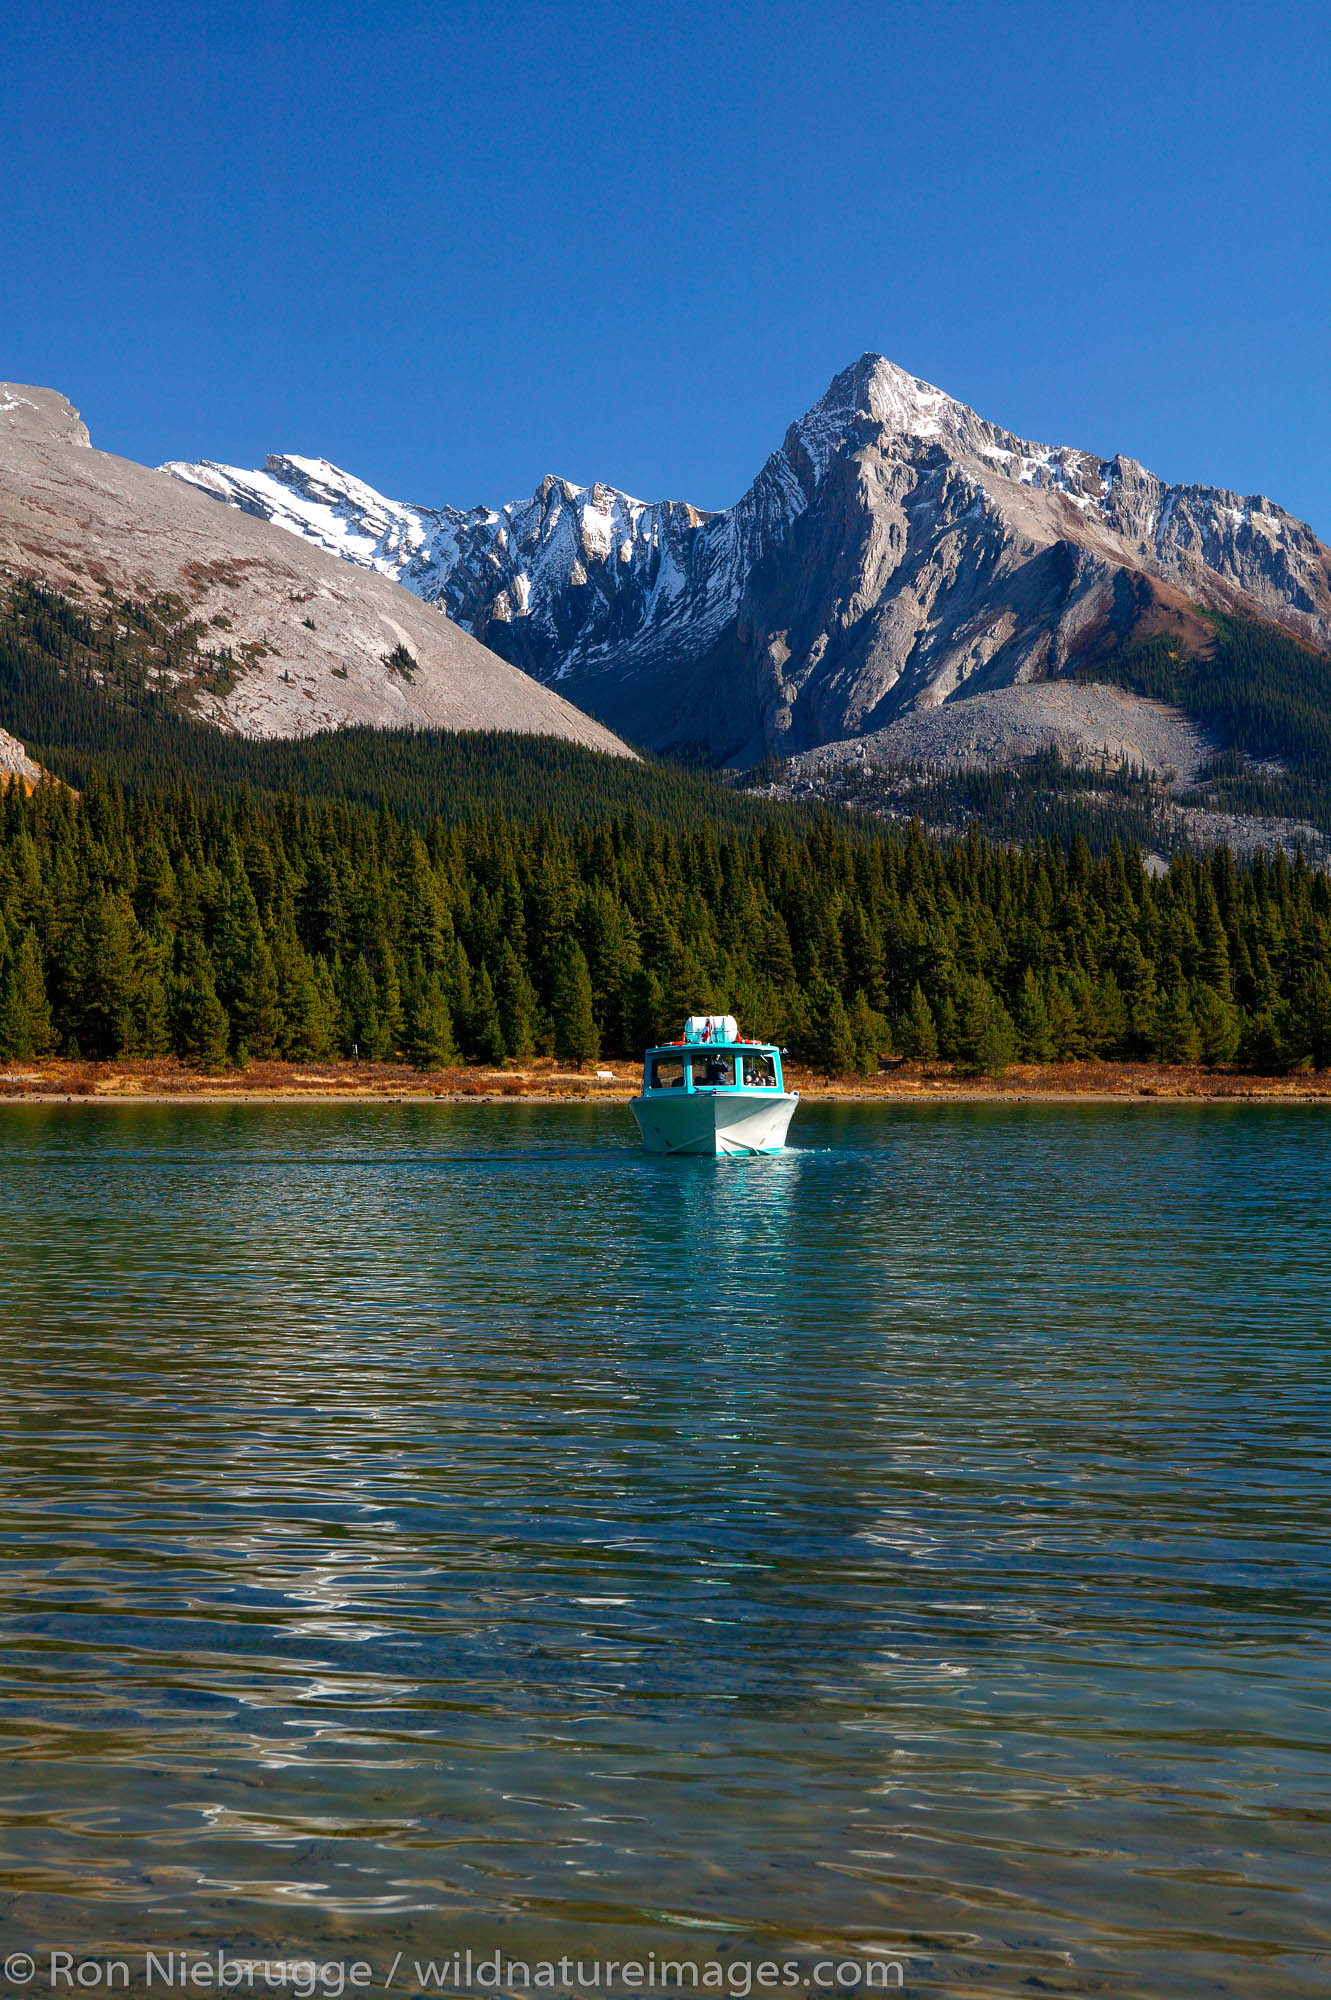 Tour boat on Maligne Lake, Jasper National Park, Alberta, Canada.